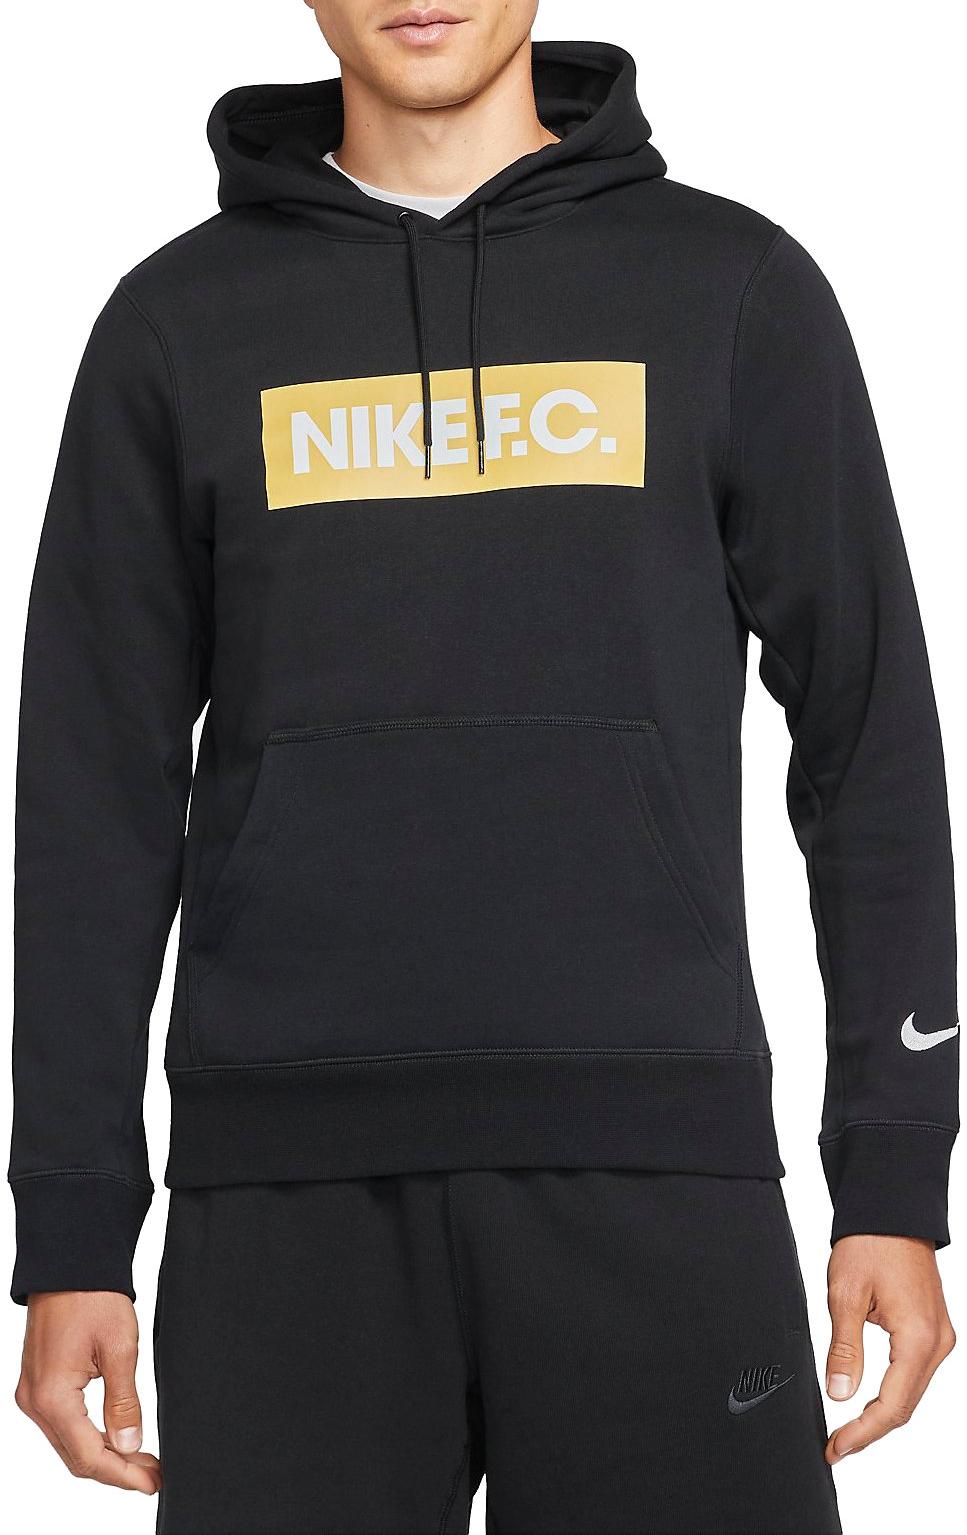 Hanorac cu gluga Nike F.C. Men s Pullover Fleece Soccer Hoodie